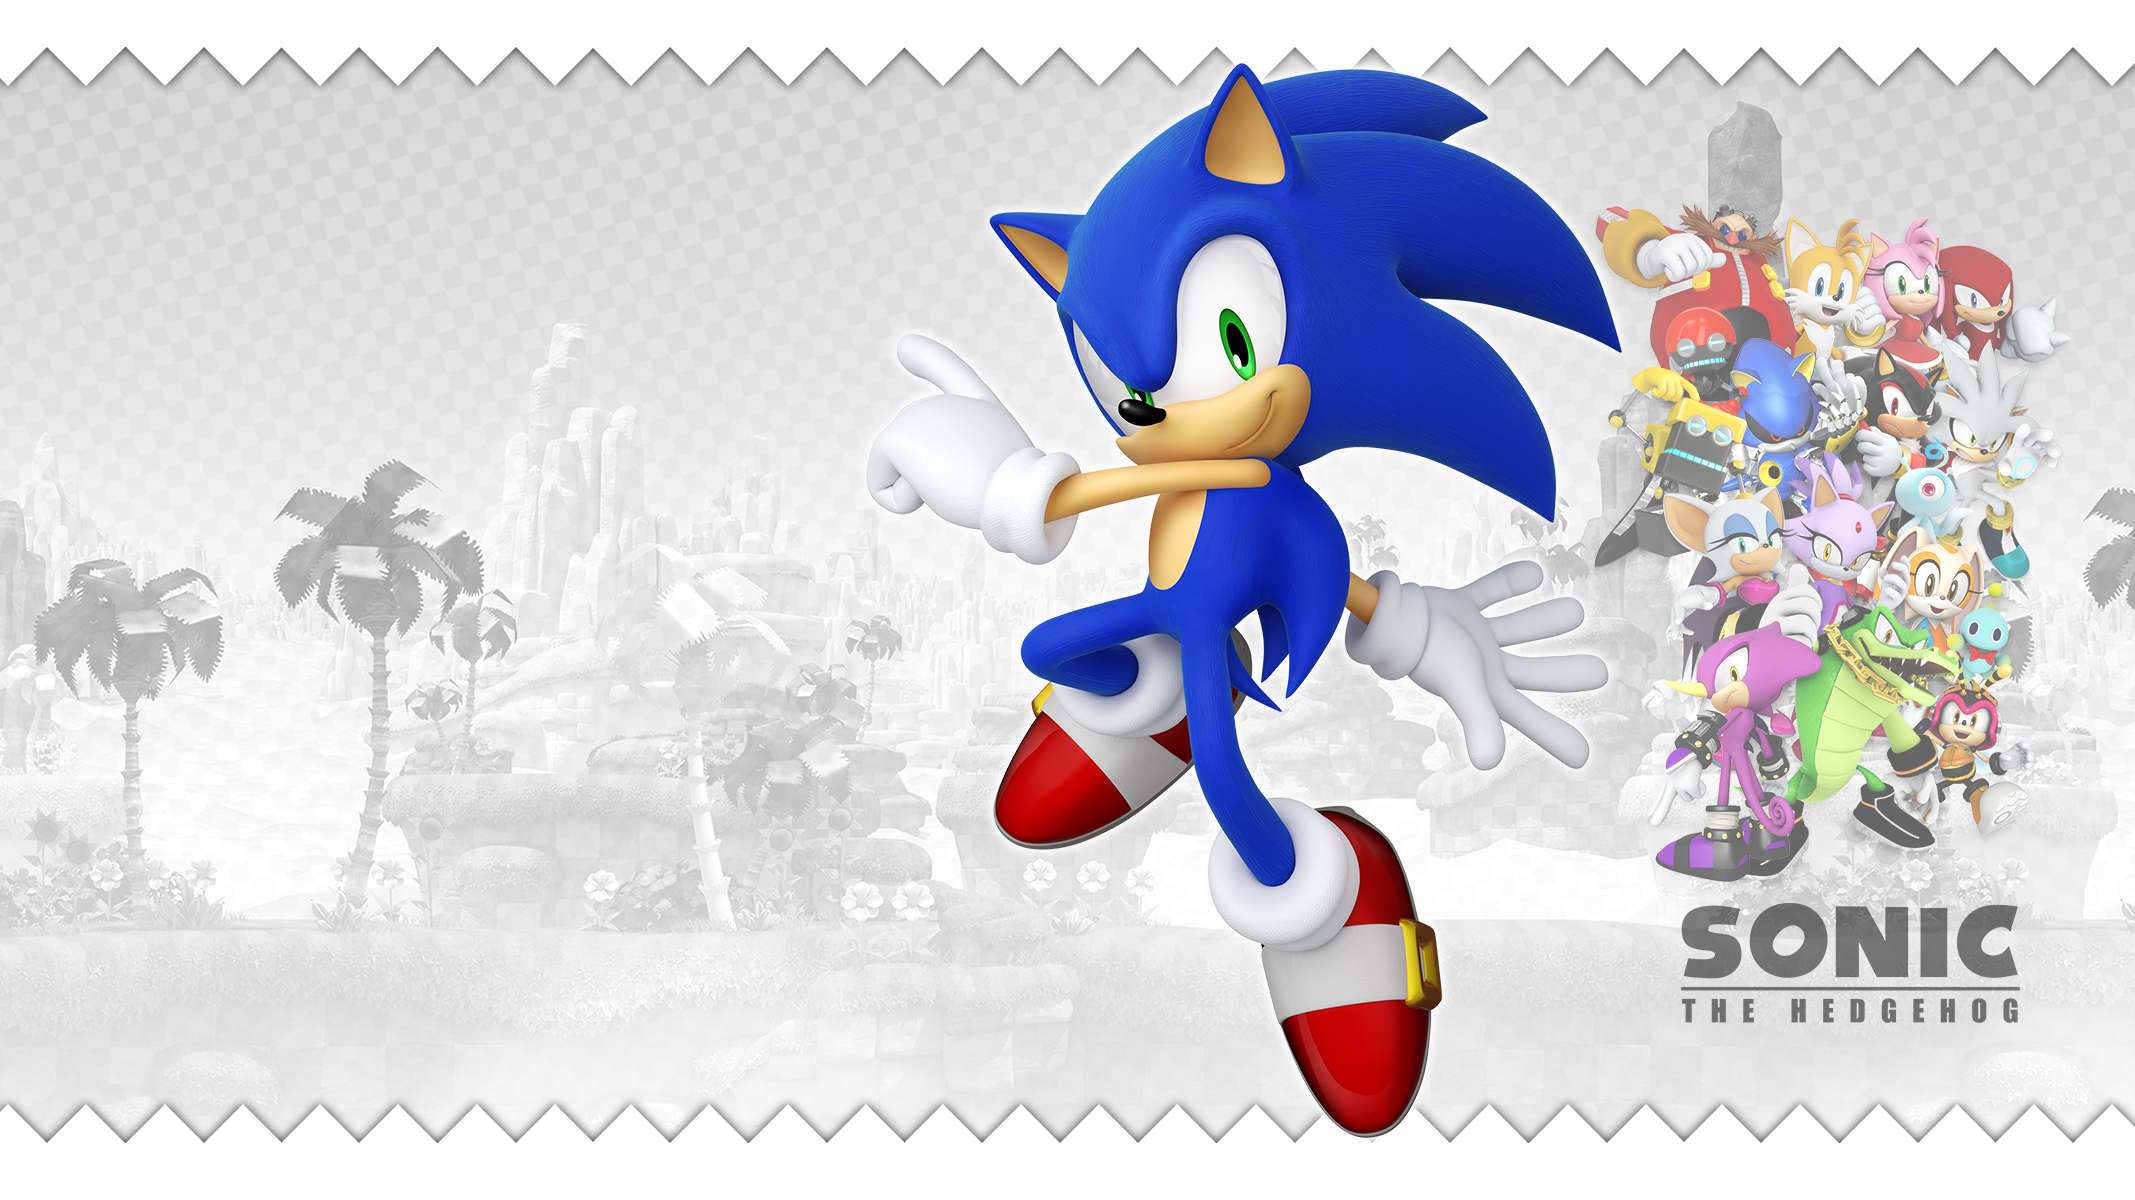 Sonic the Hedgehog Wallpaper by Super Hedgehog on